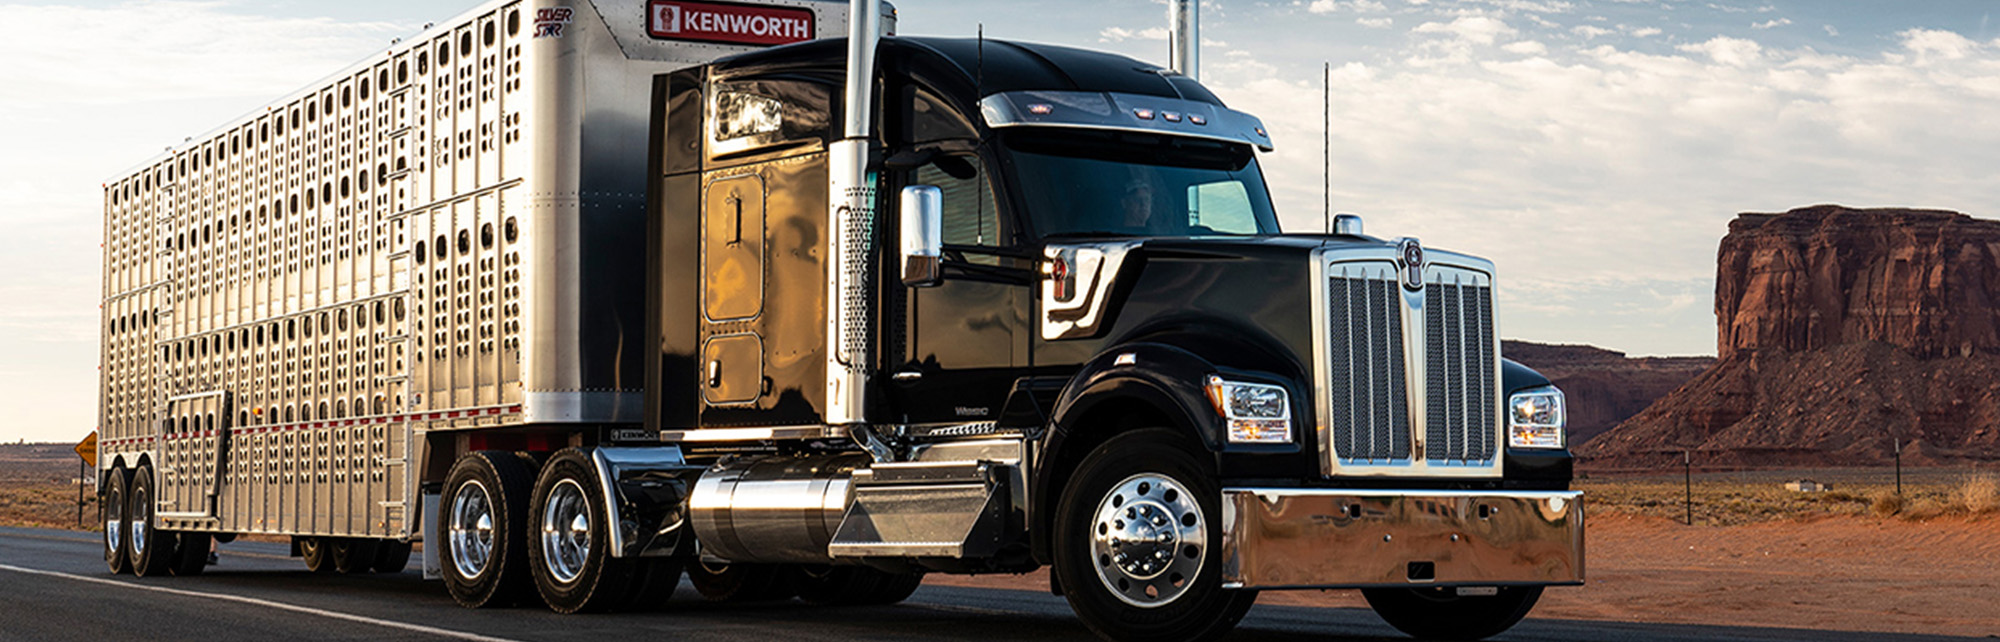 Used Kenworth Trucks in Canada